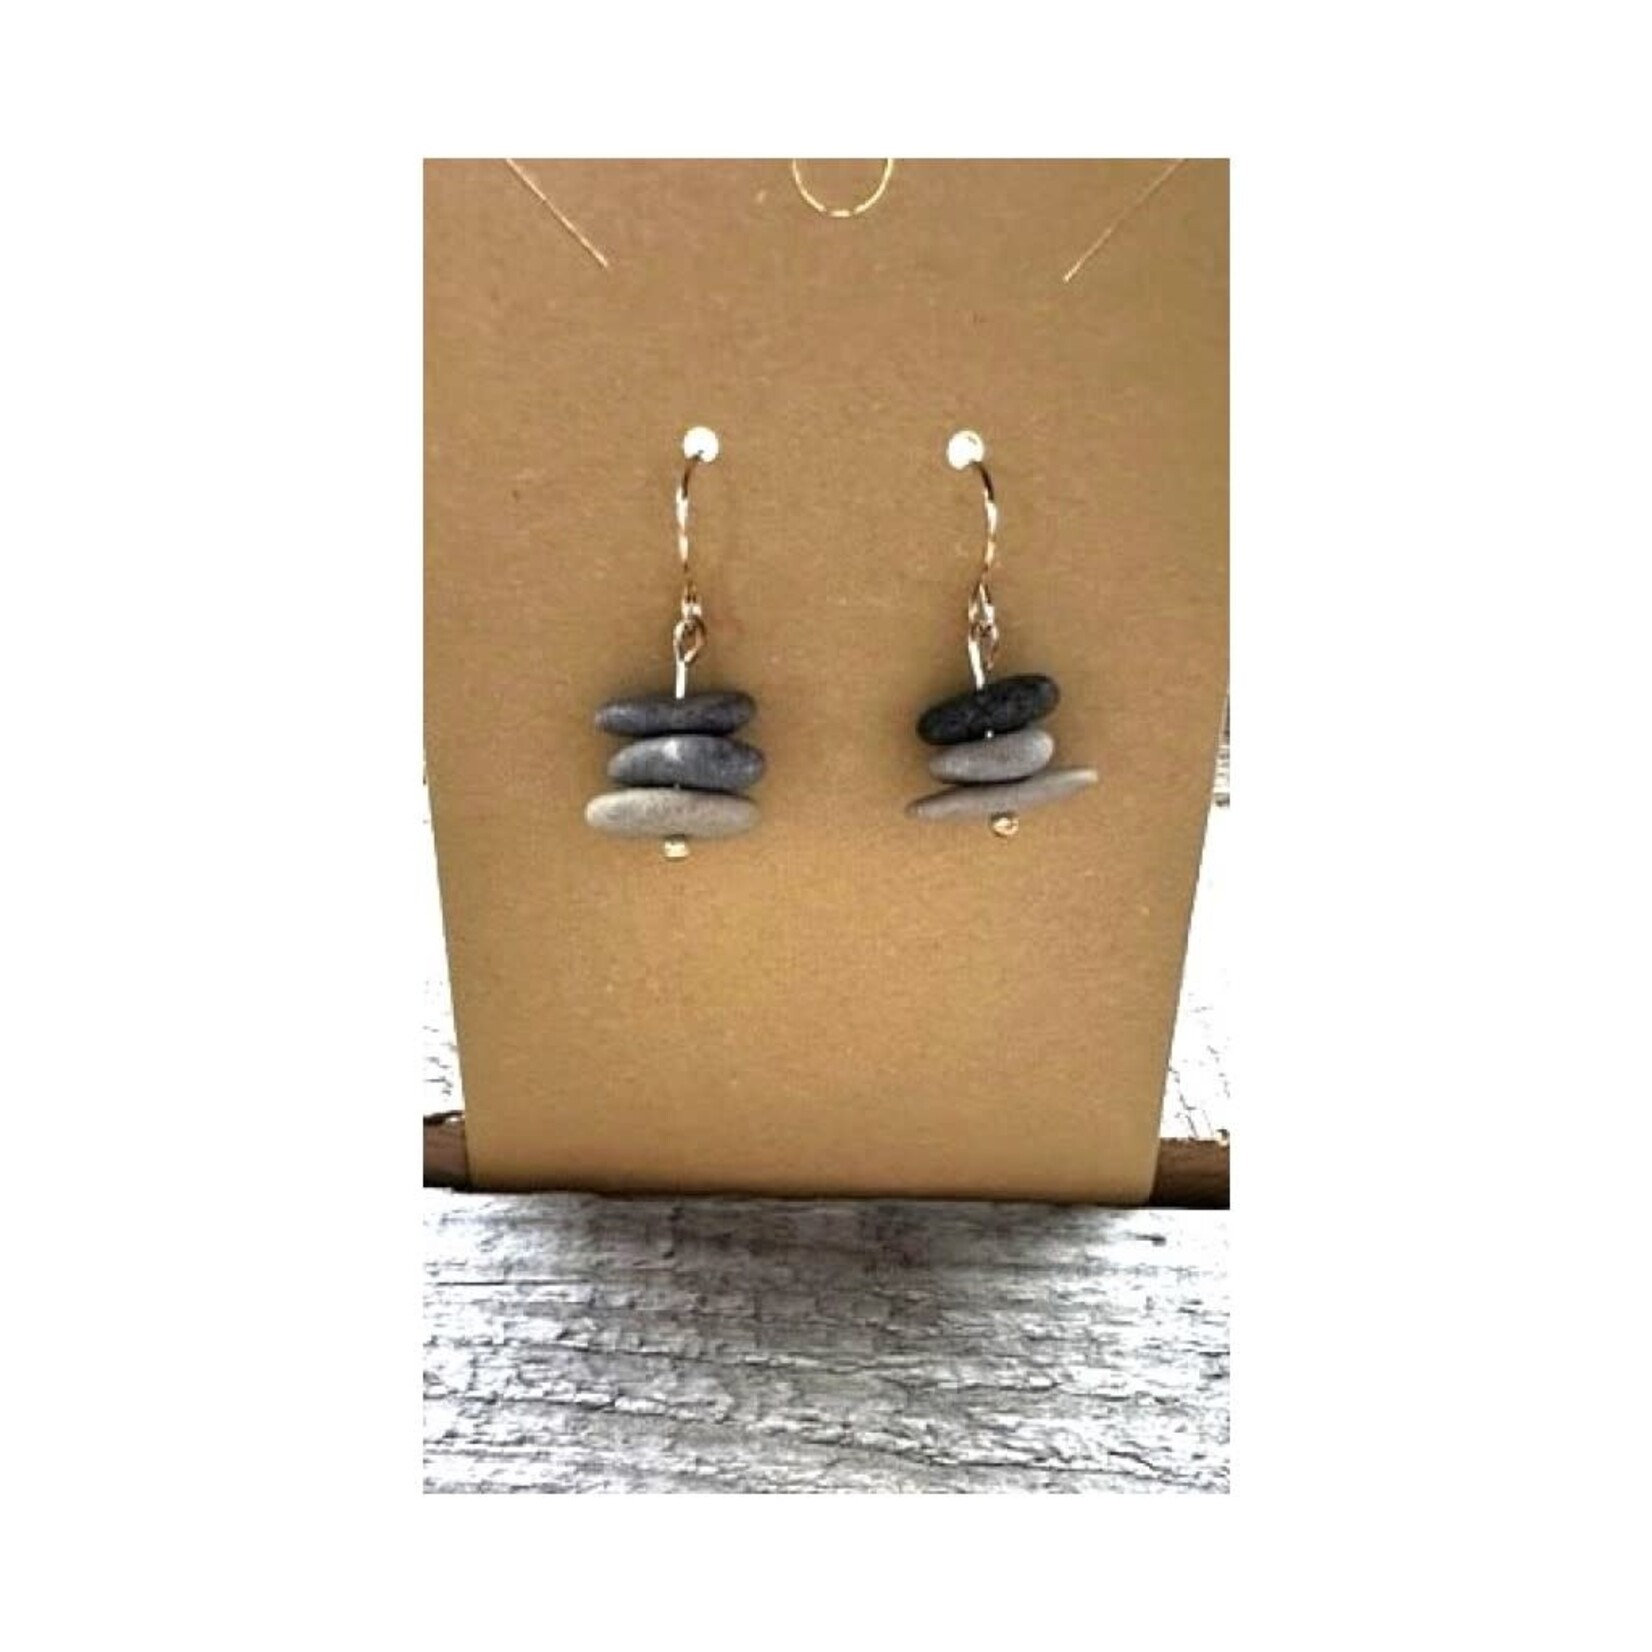 French Hook Earrings - Stone Cairn 11